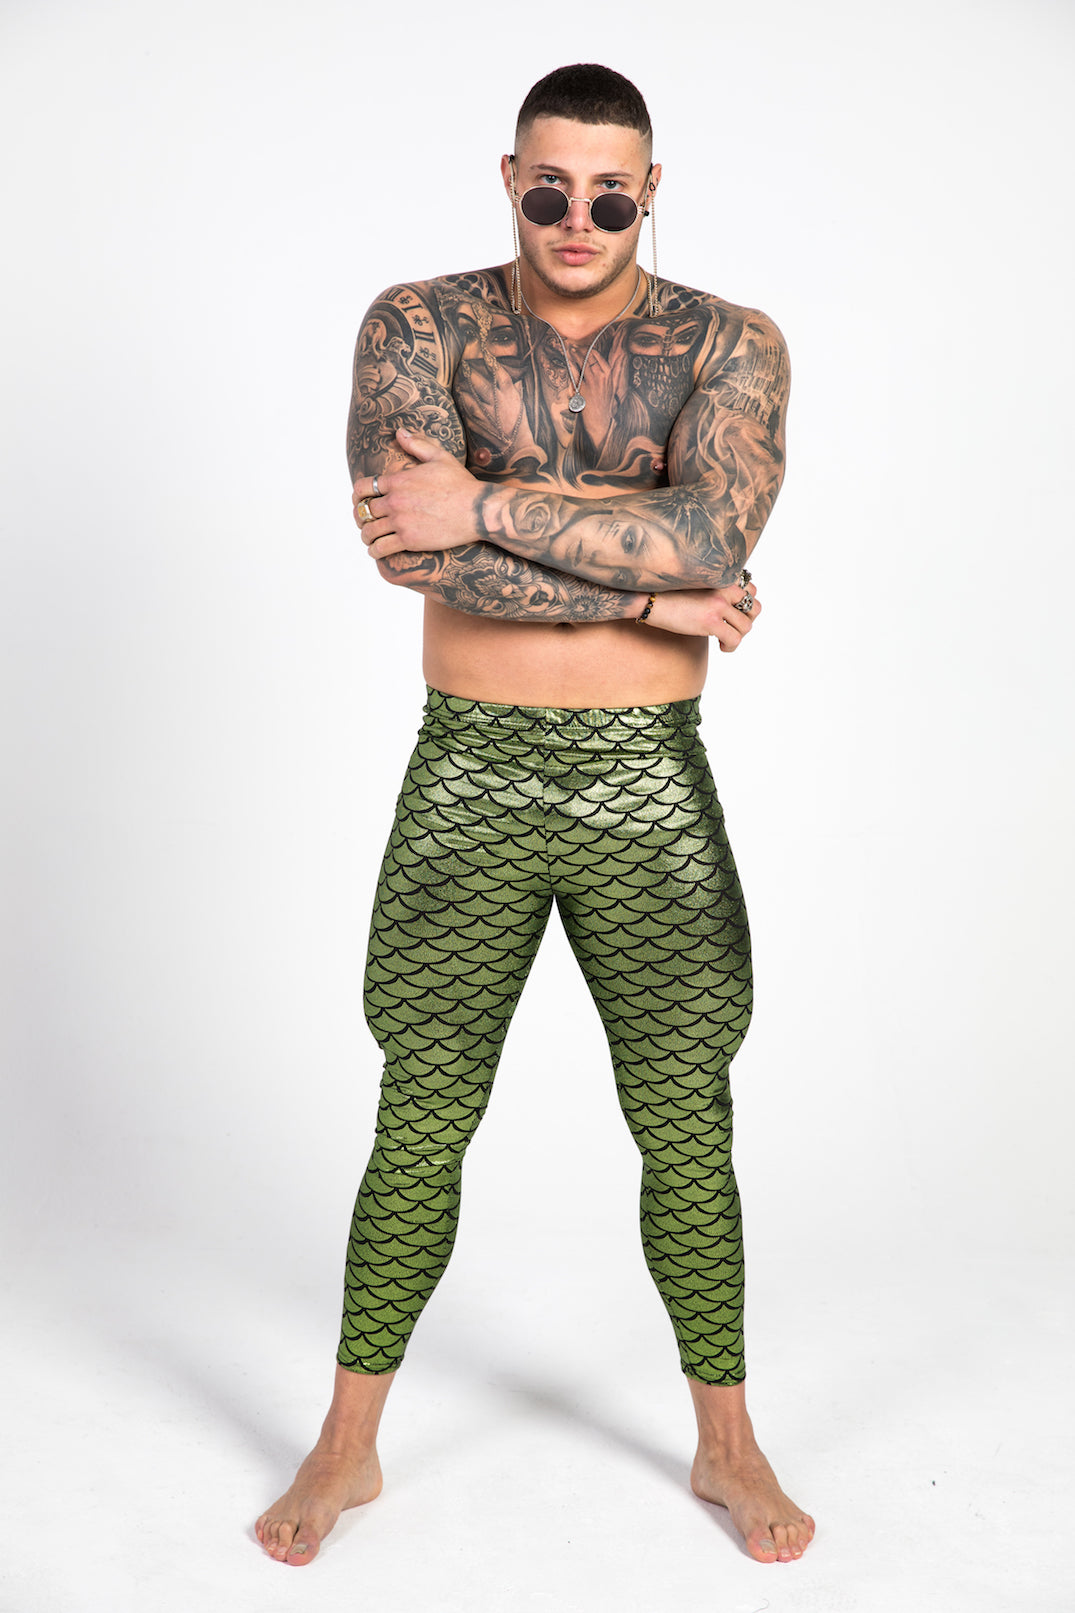 man wearing green fish scale leggings